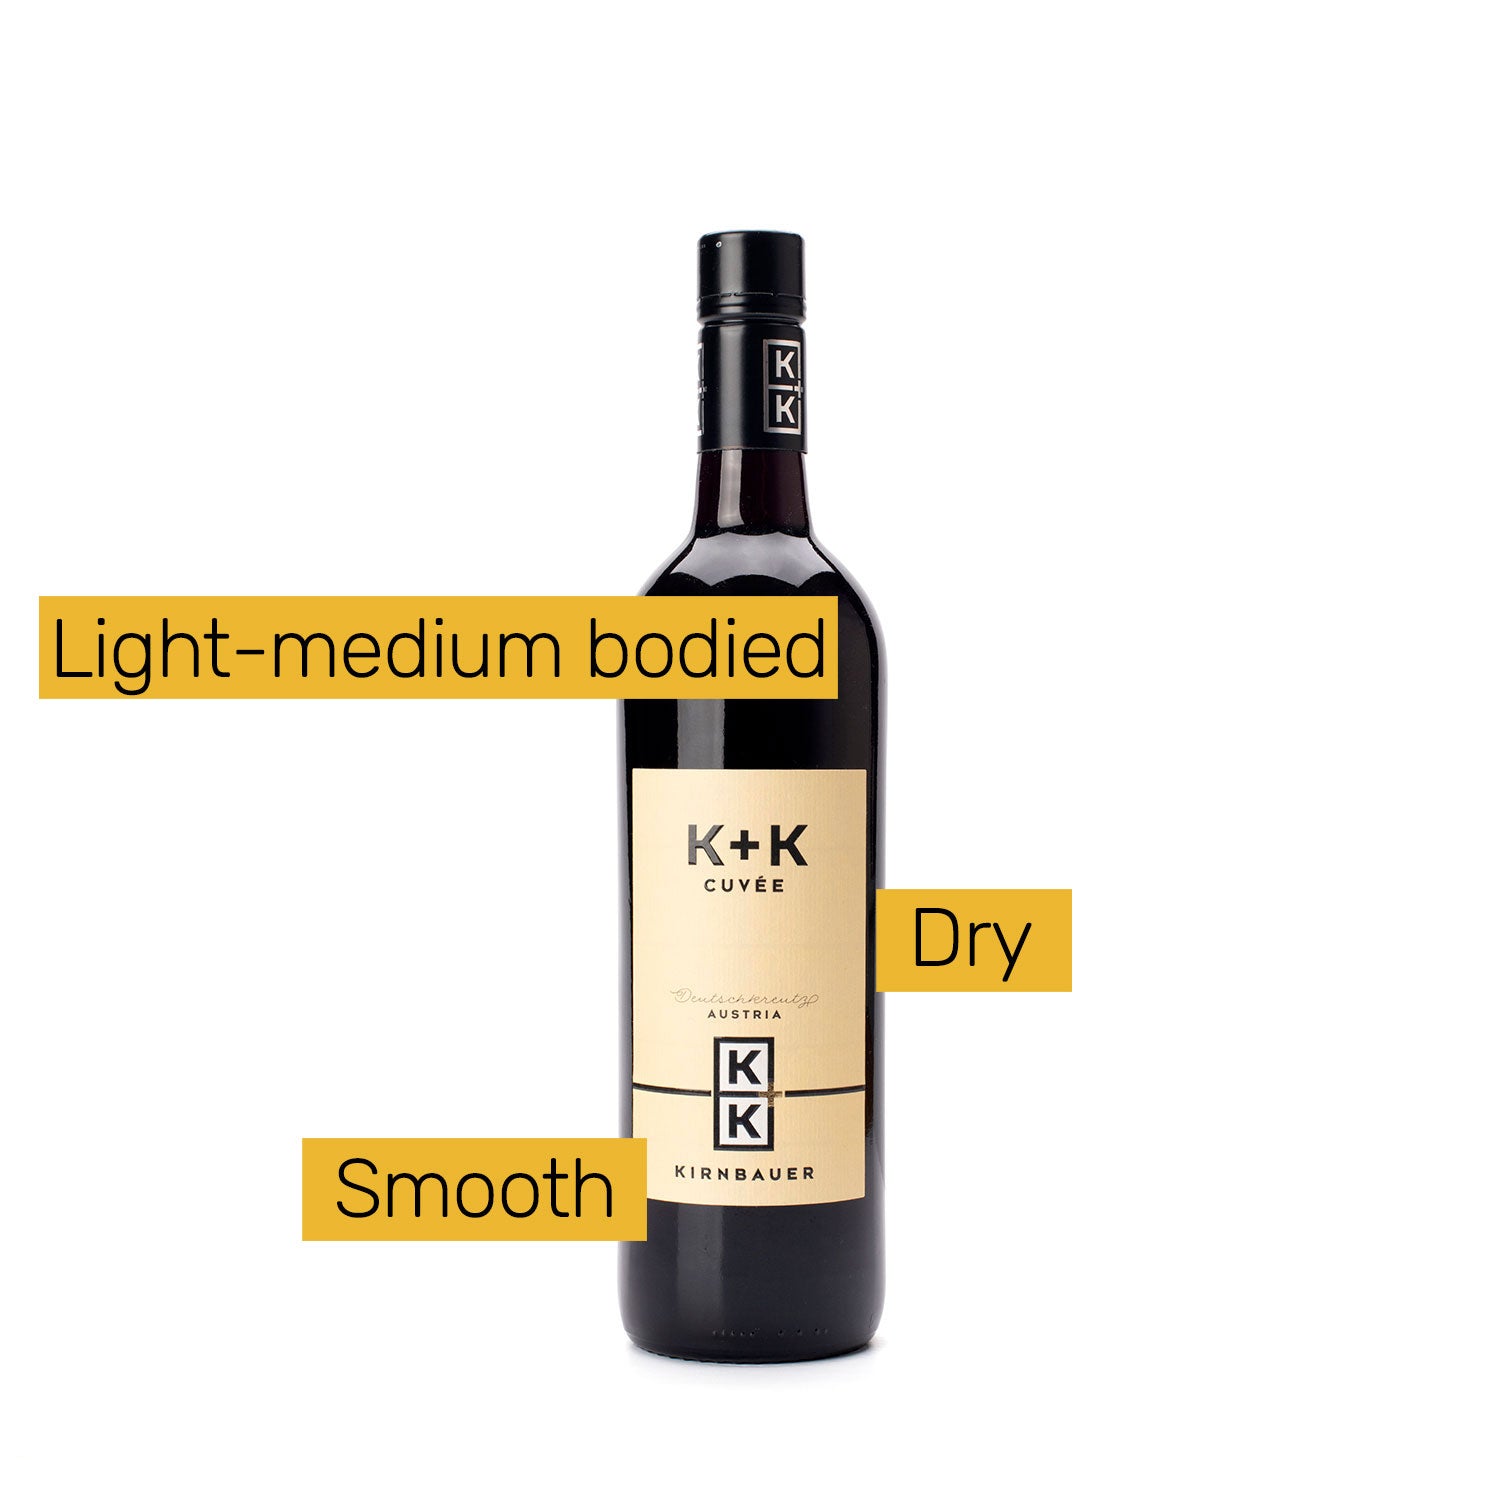 light-medium bodied dry smooth austrian red wine